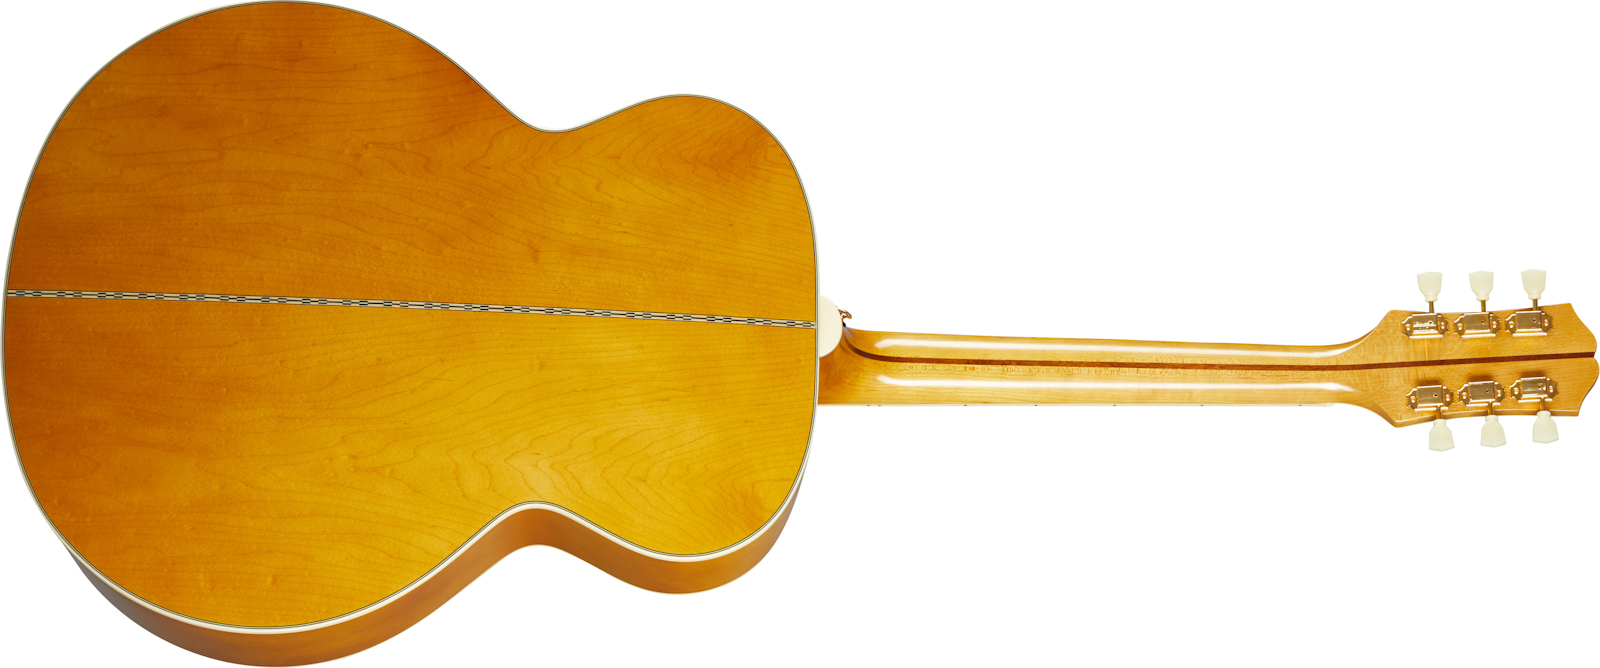 Epiphone J-200 Inspired By Gibson Jumbo Epicea Erable Lau - Aged Antique Natural - Elektro-akoestische gitaar - Variation 1